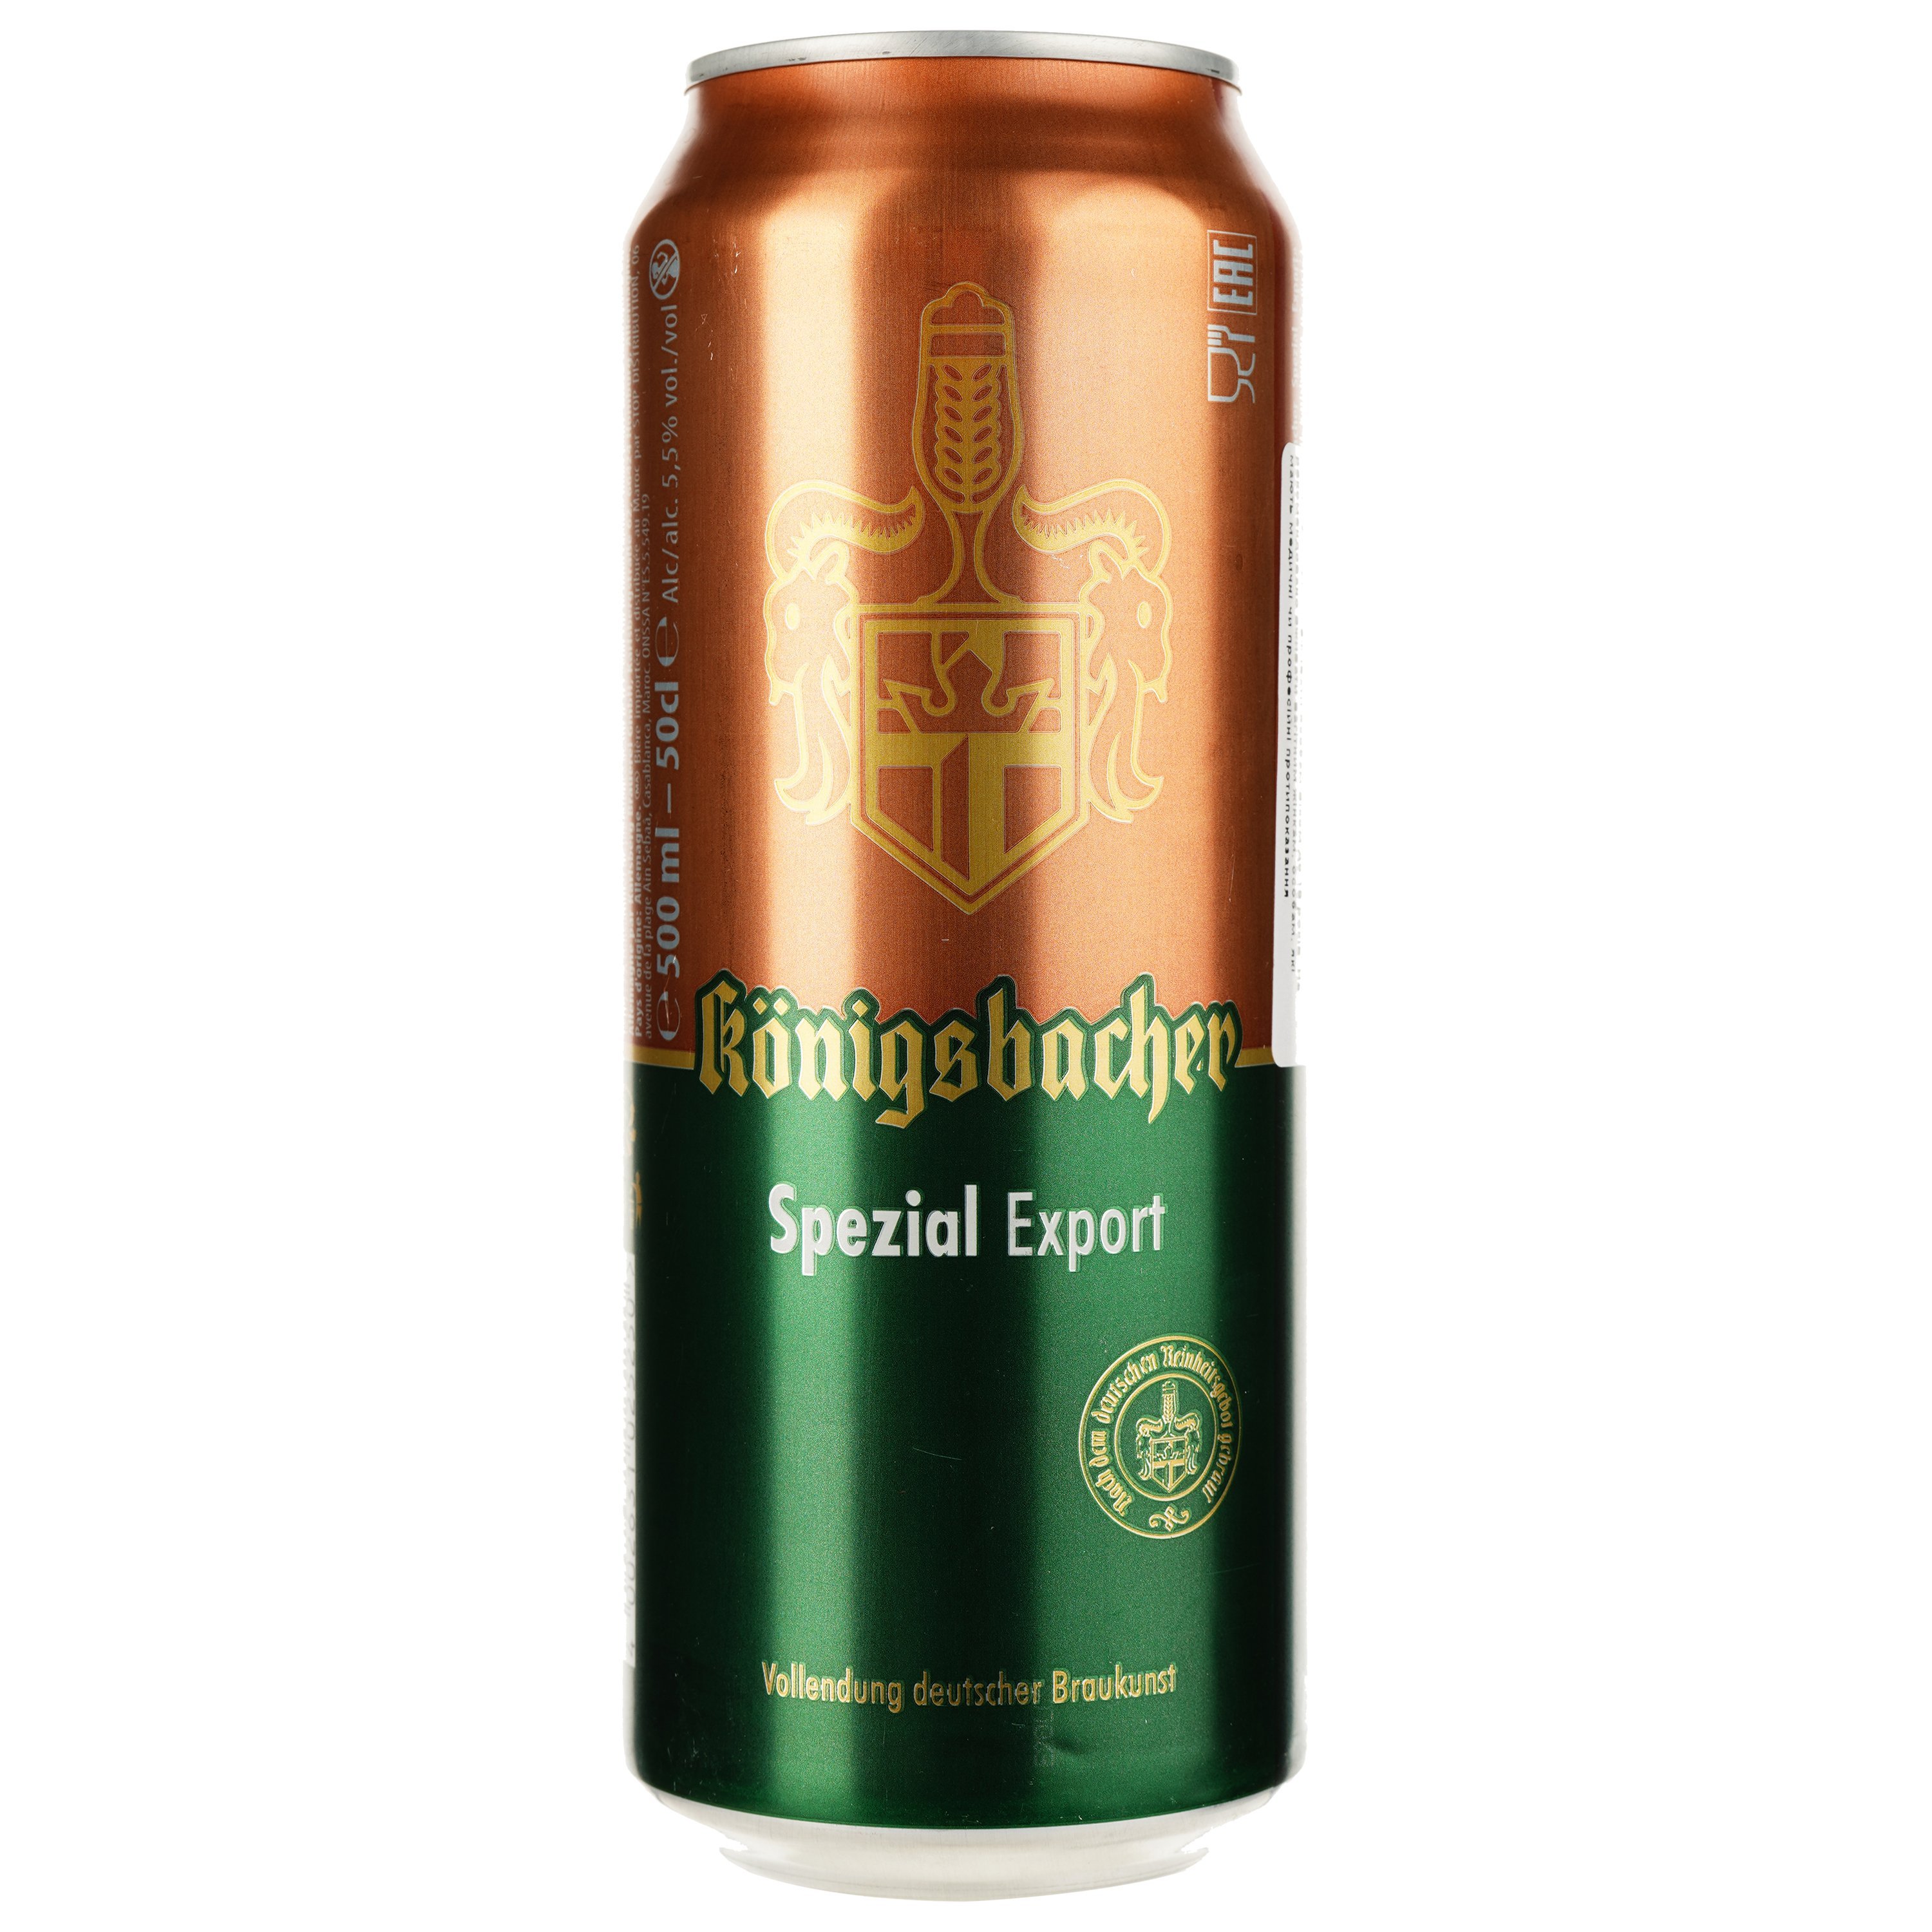 Пиво Konigsbacher Pils Drittl светлое 4.6% 0.5 л ж/б - фото 1